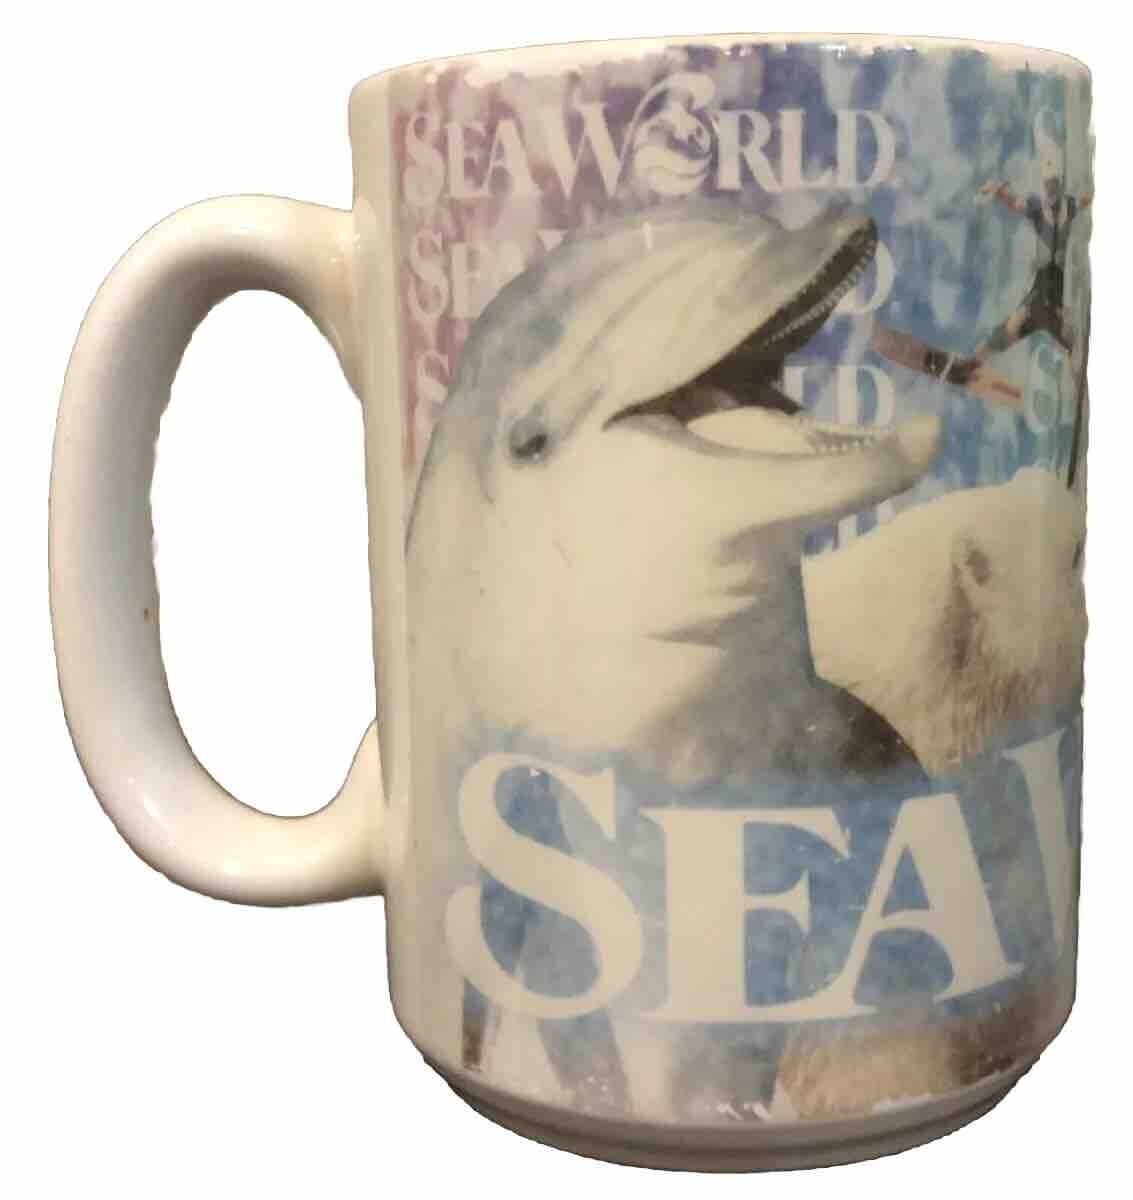 Sea World Logo Orca Dolphin Polar Bear Cup 16 Oz. Mug Shamu Aquarium Theme Park